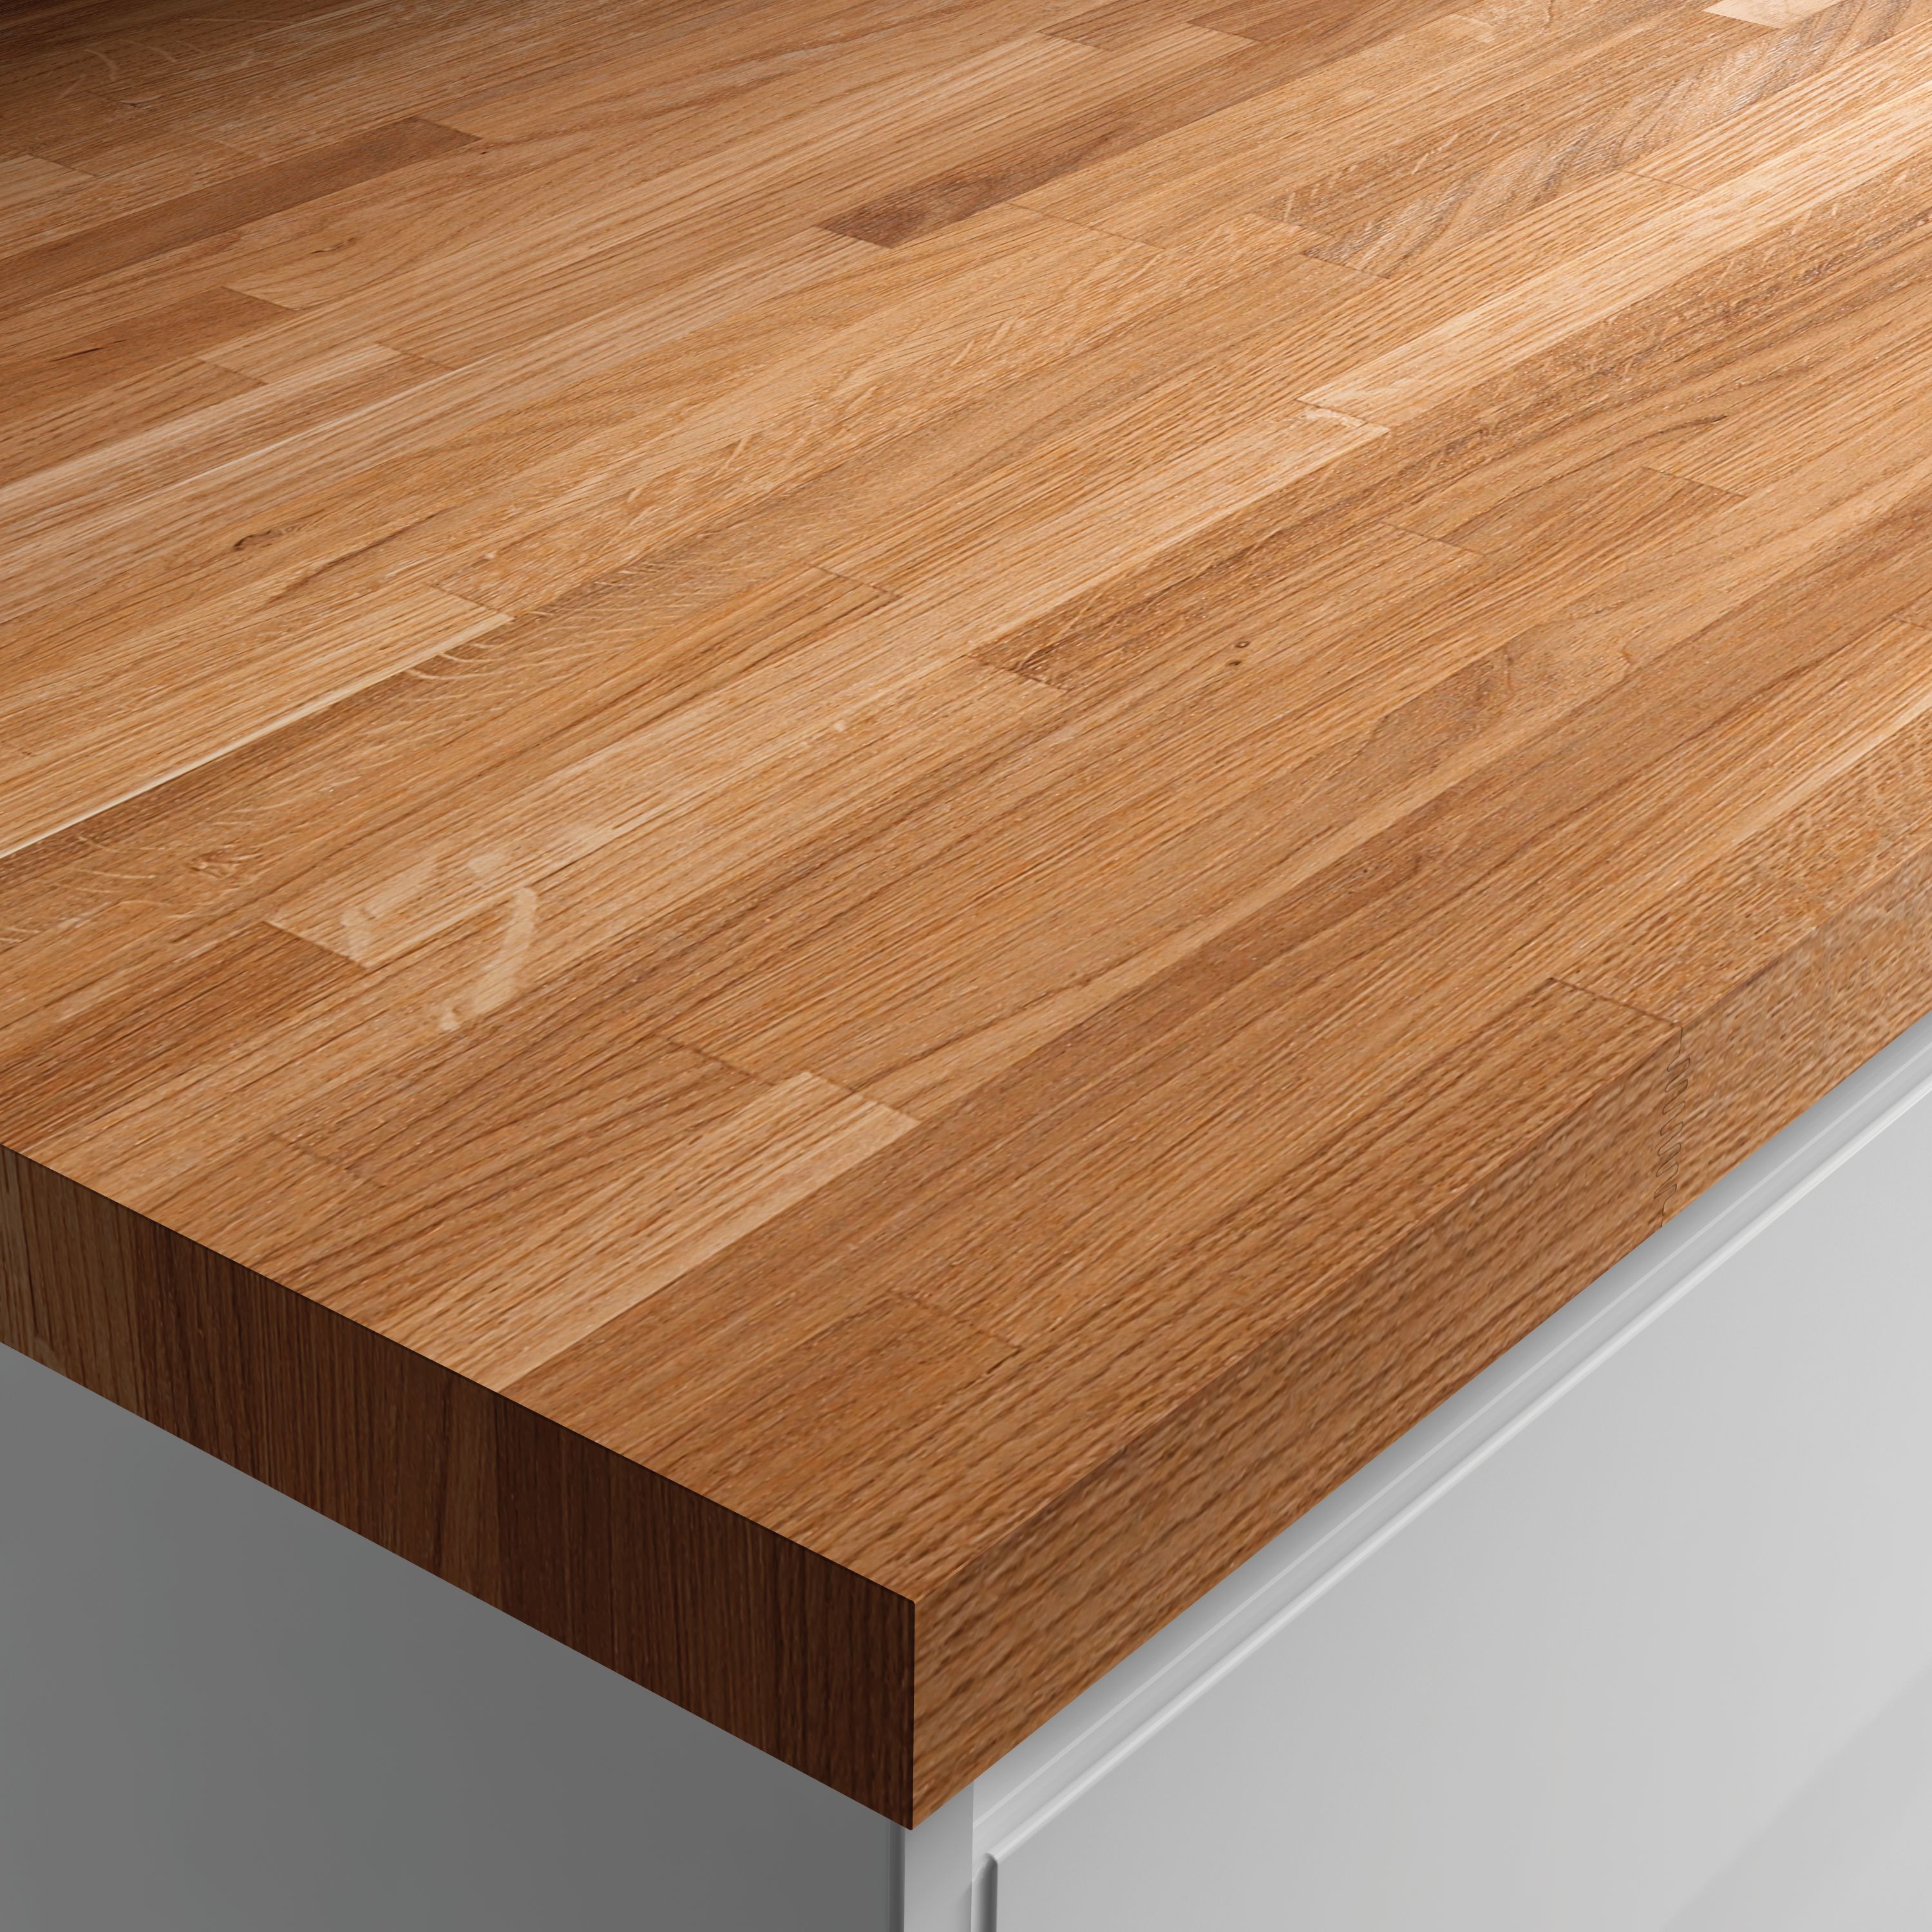 Image of Wickes Solid Wood Worktop - Solid Oak 600mm x 26mm x 3m